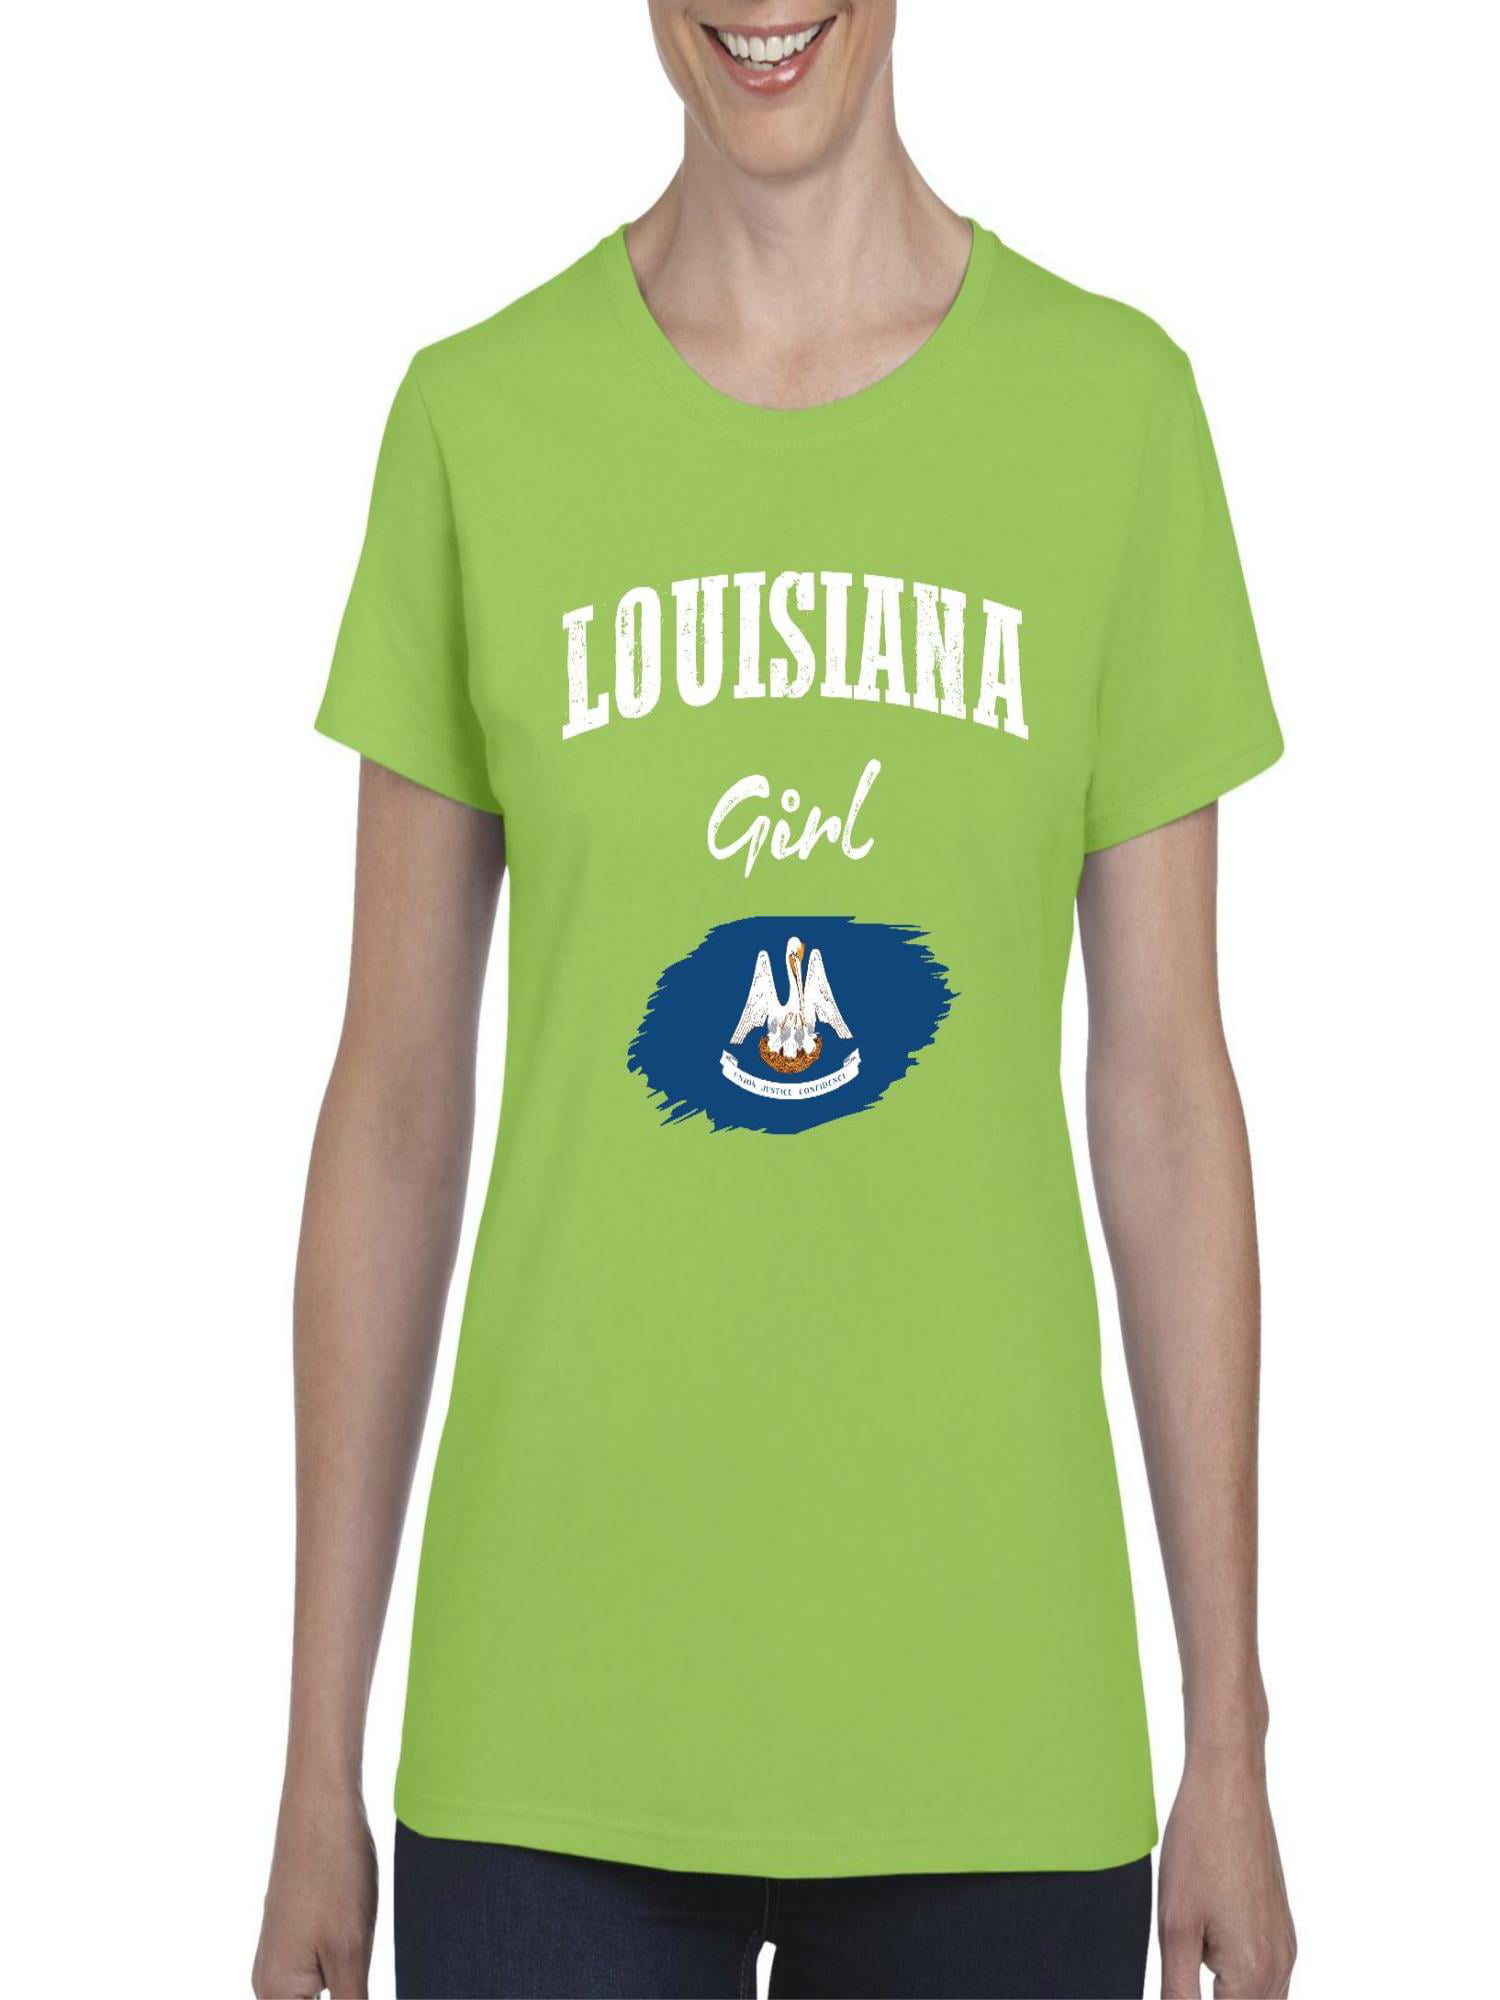 louisiana girl t shirt